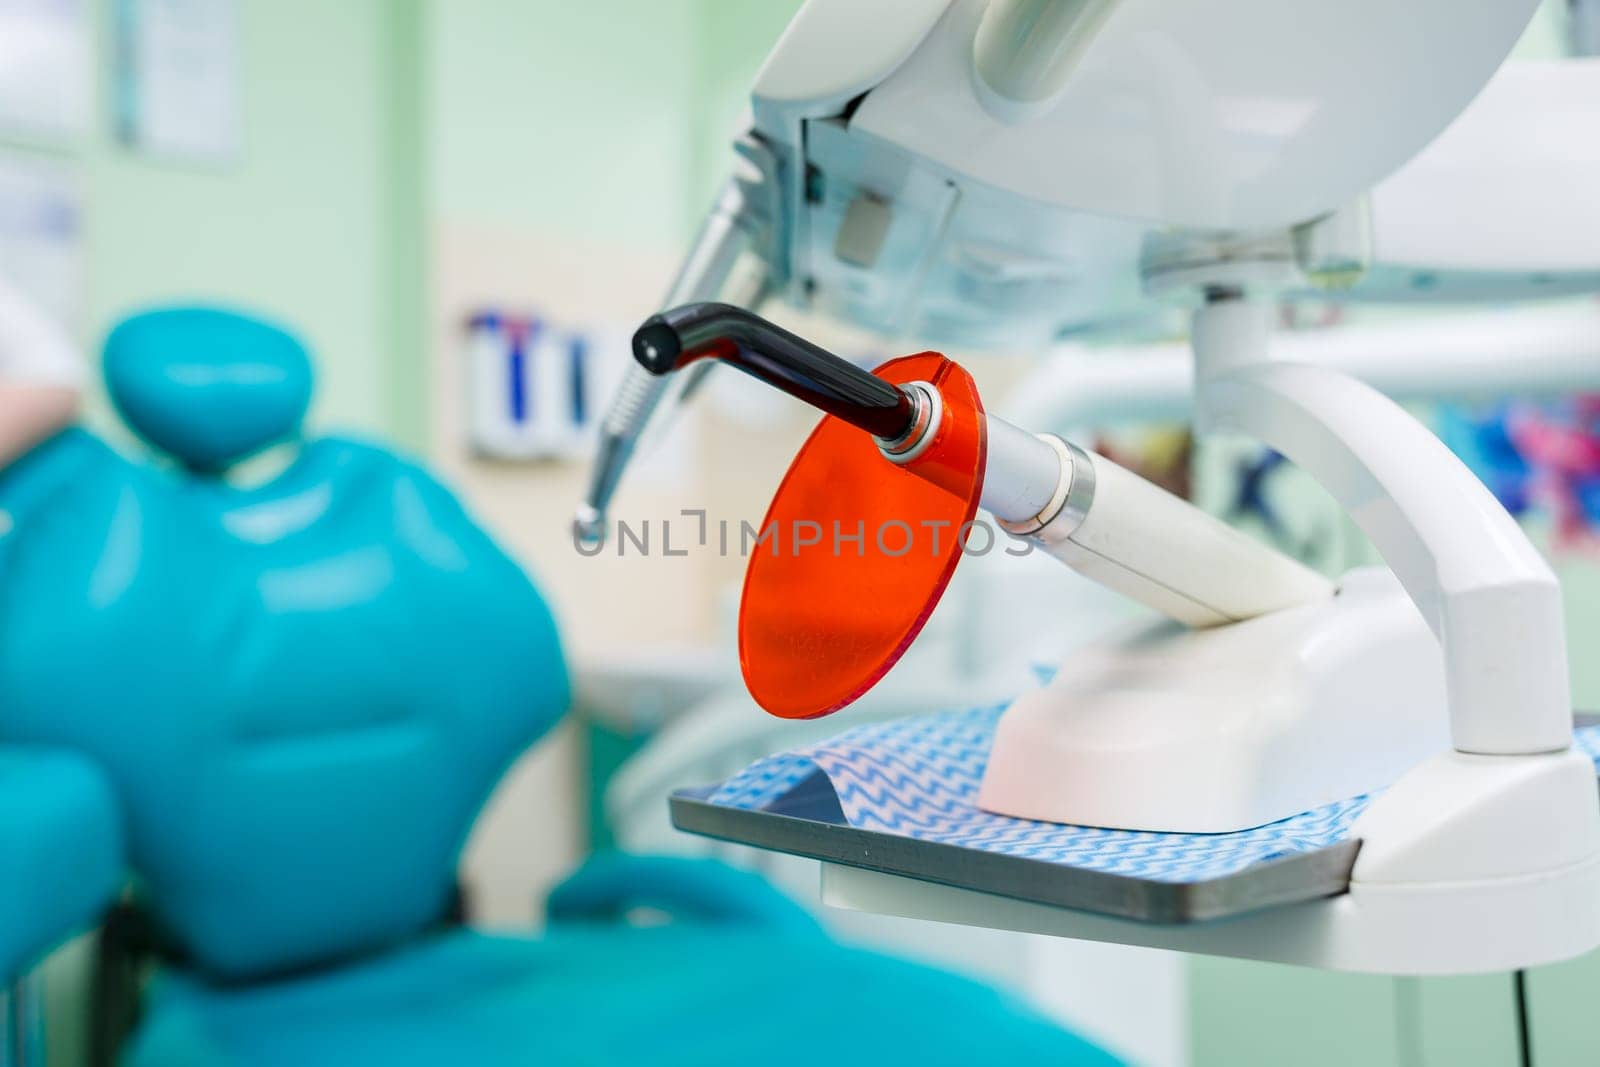 Professional modern tool for the treatment of dental diseases. Dental office equipment by Dmitrytph